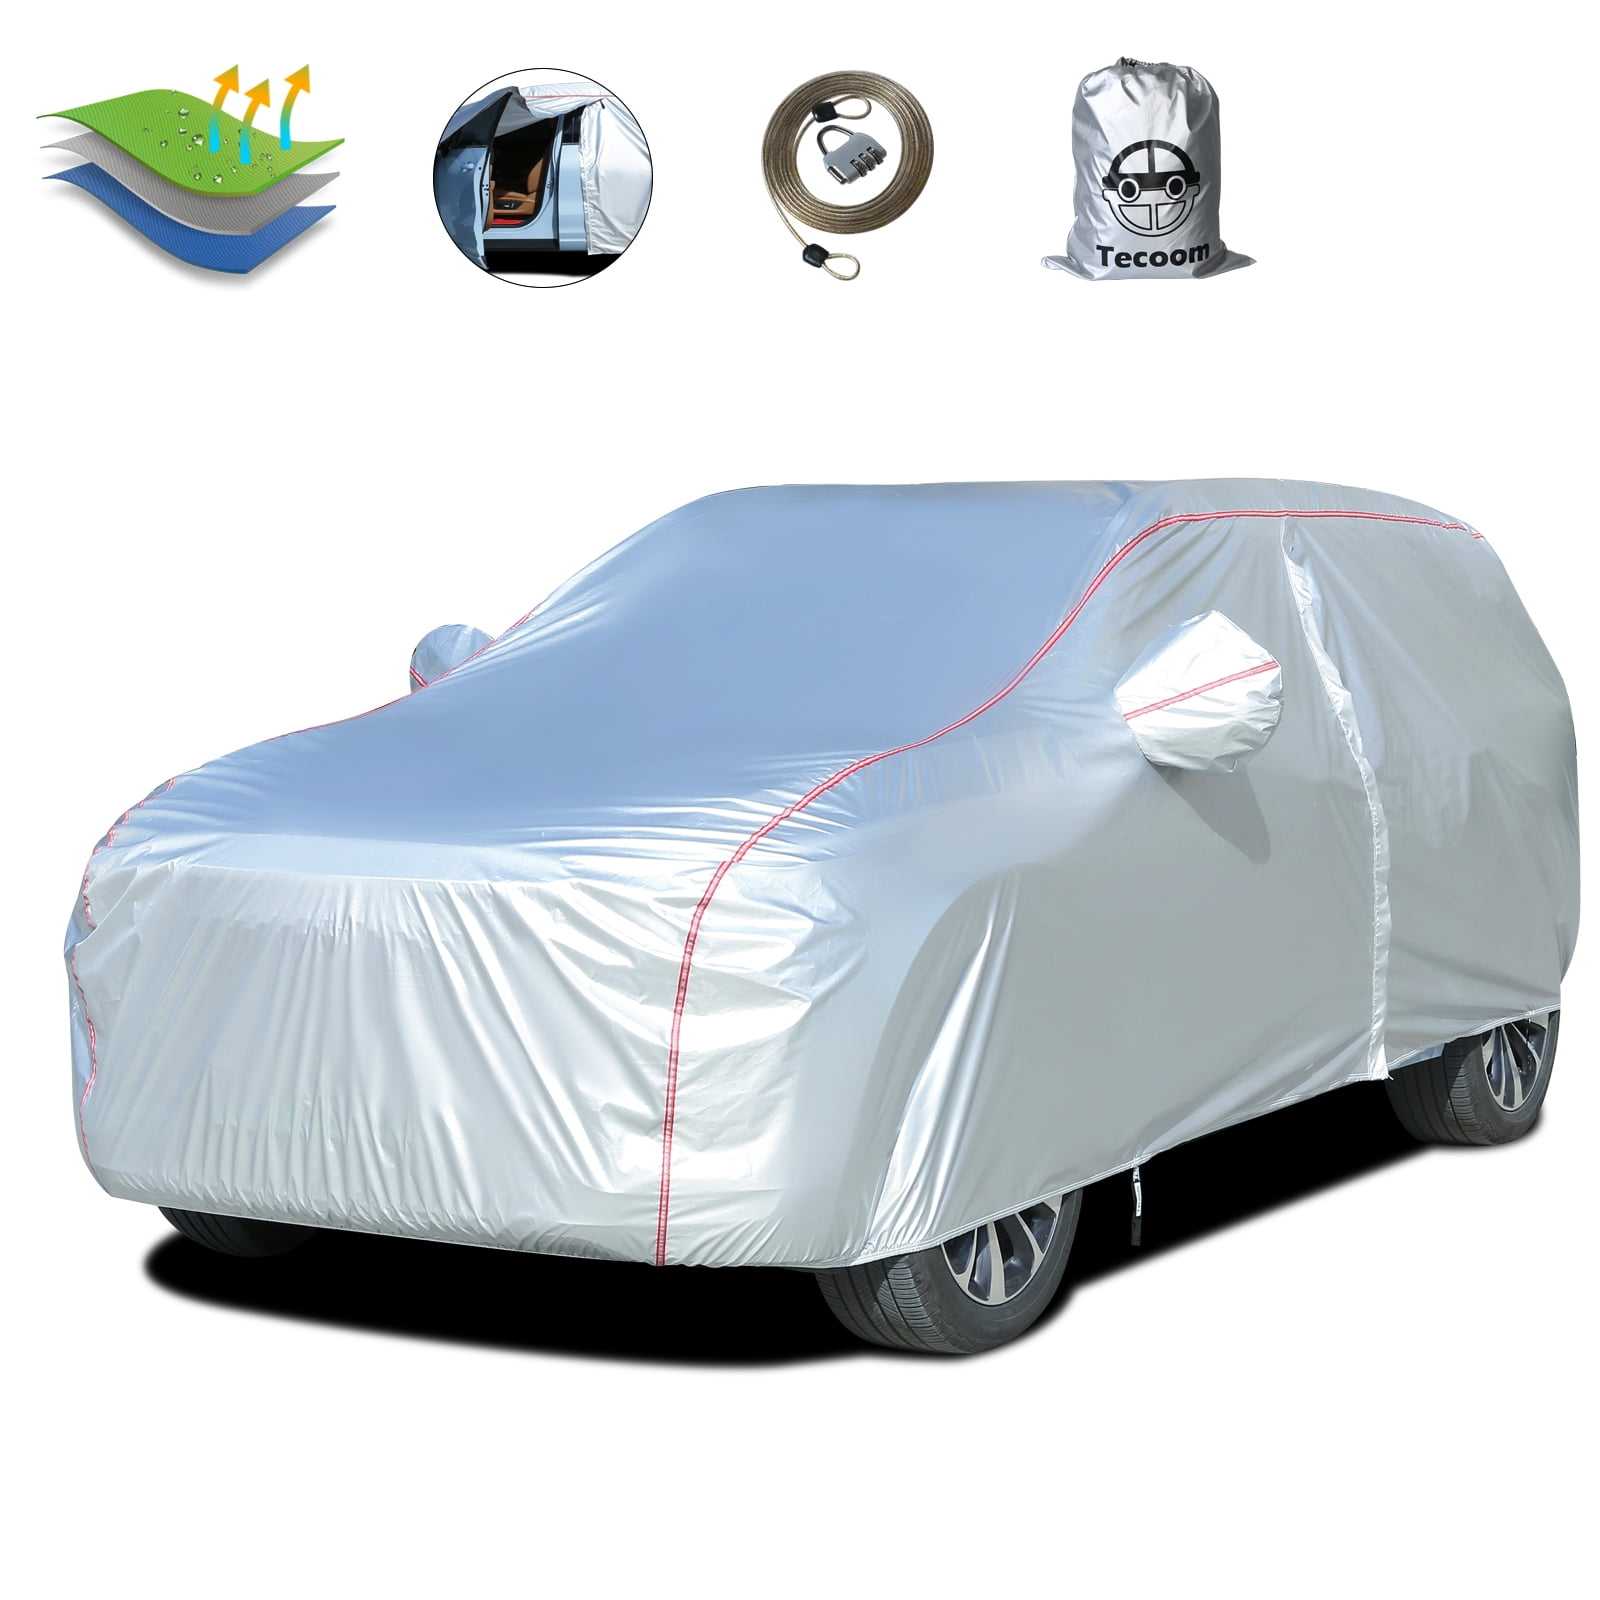 Tecoom Car Cover Zipper Design Waterproof Windproof All Weather